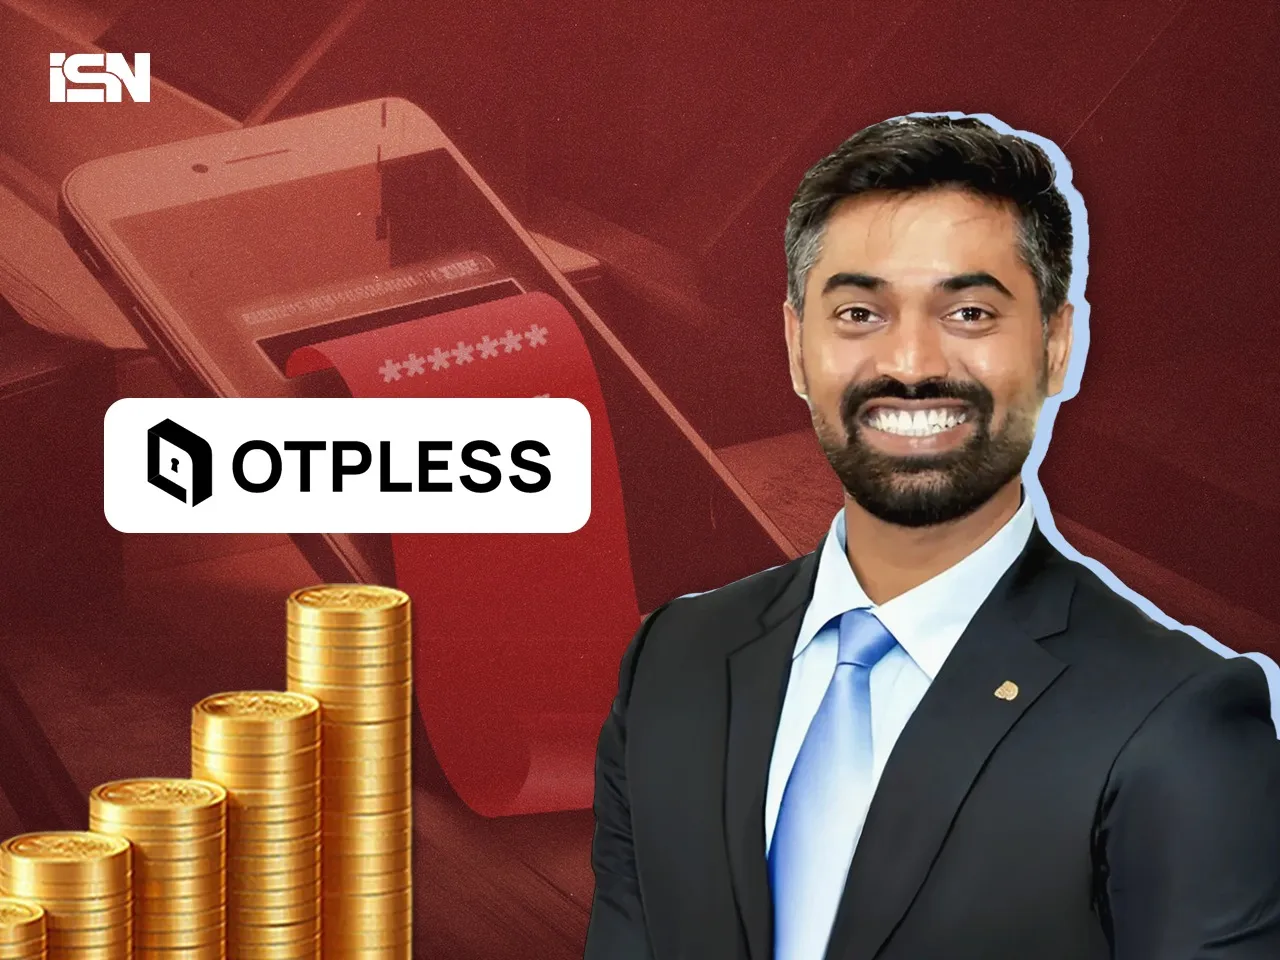 OTPless Co-founder Bhavik Koladiya